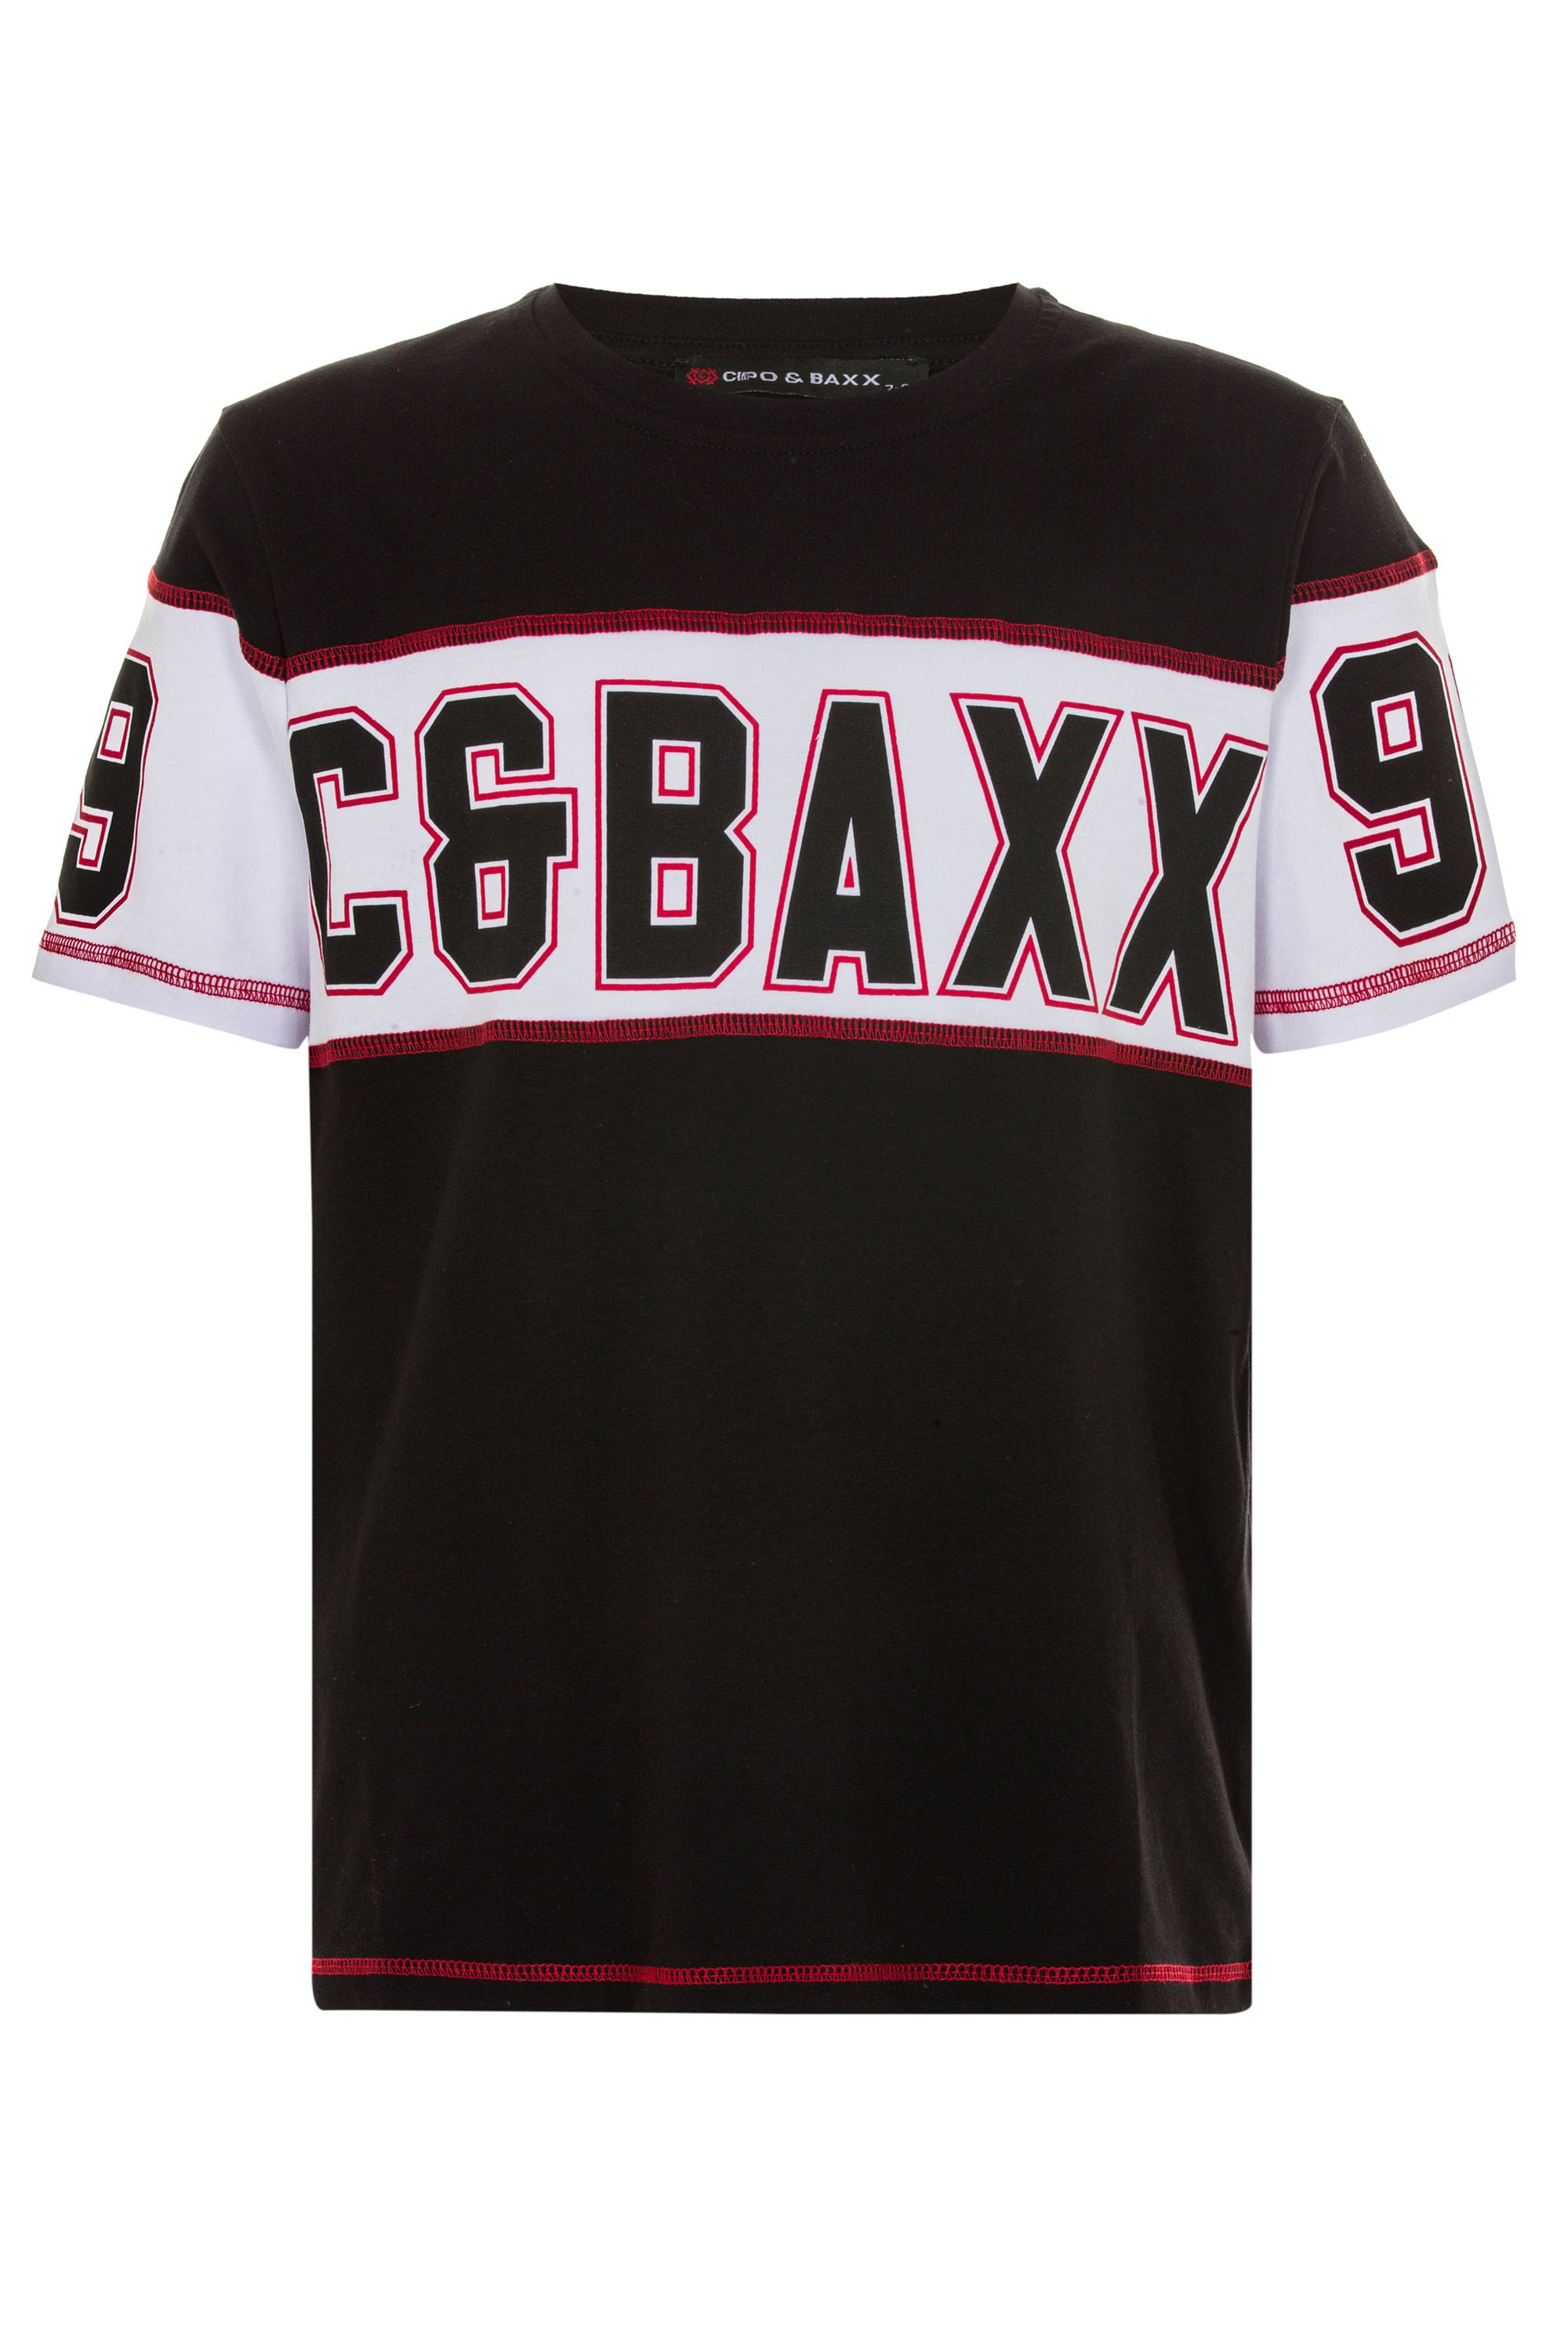 mit & | Cipo Friday Baxx Black BAUR T-Shirt, coolem Markenprint